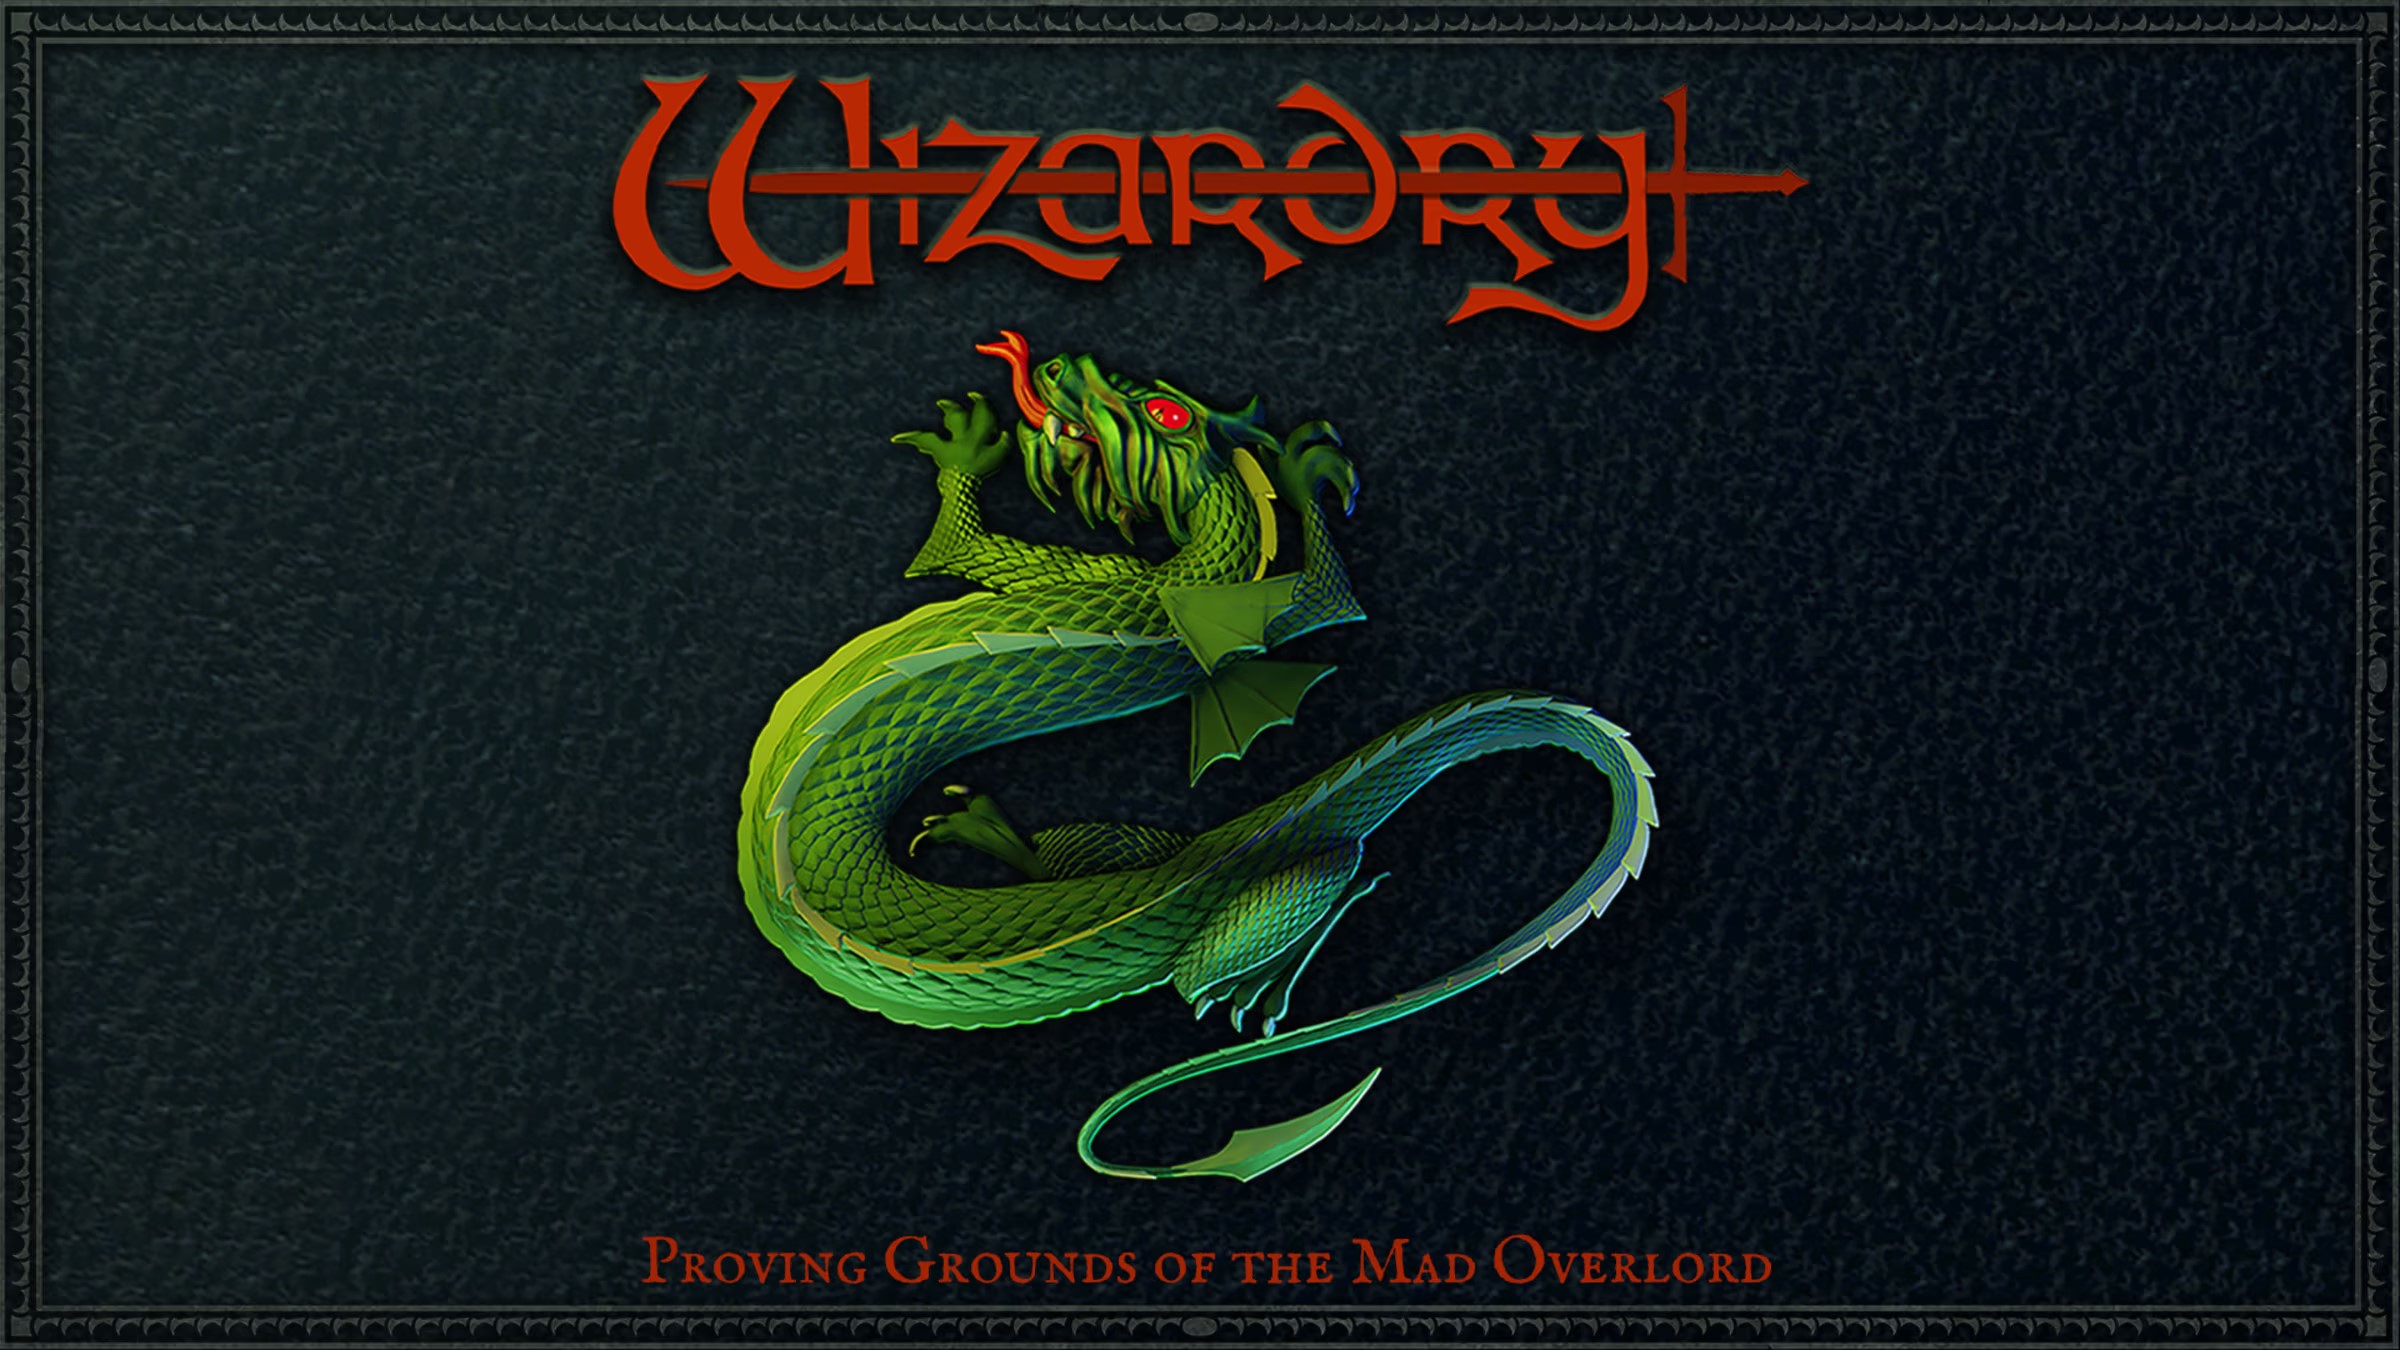 wizardry remake meniac recensione cover